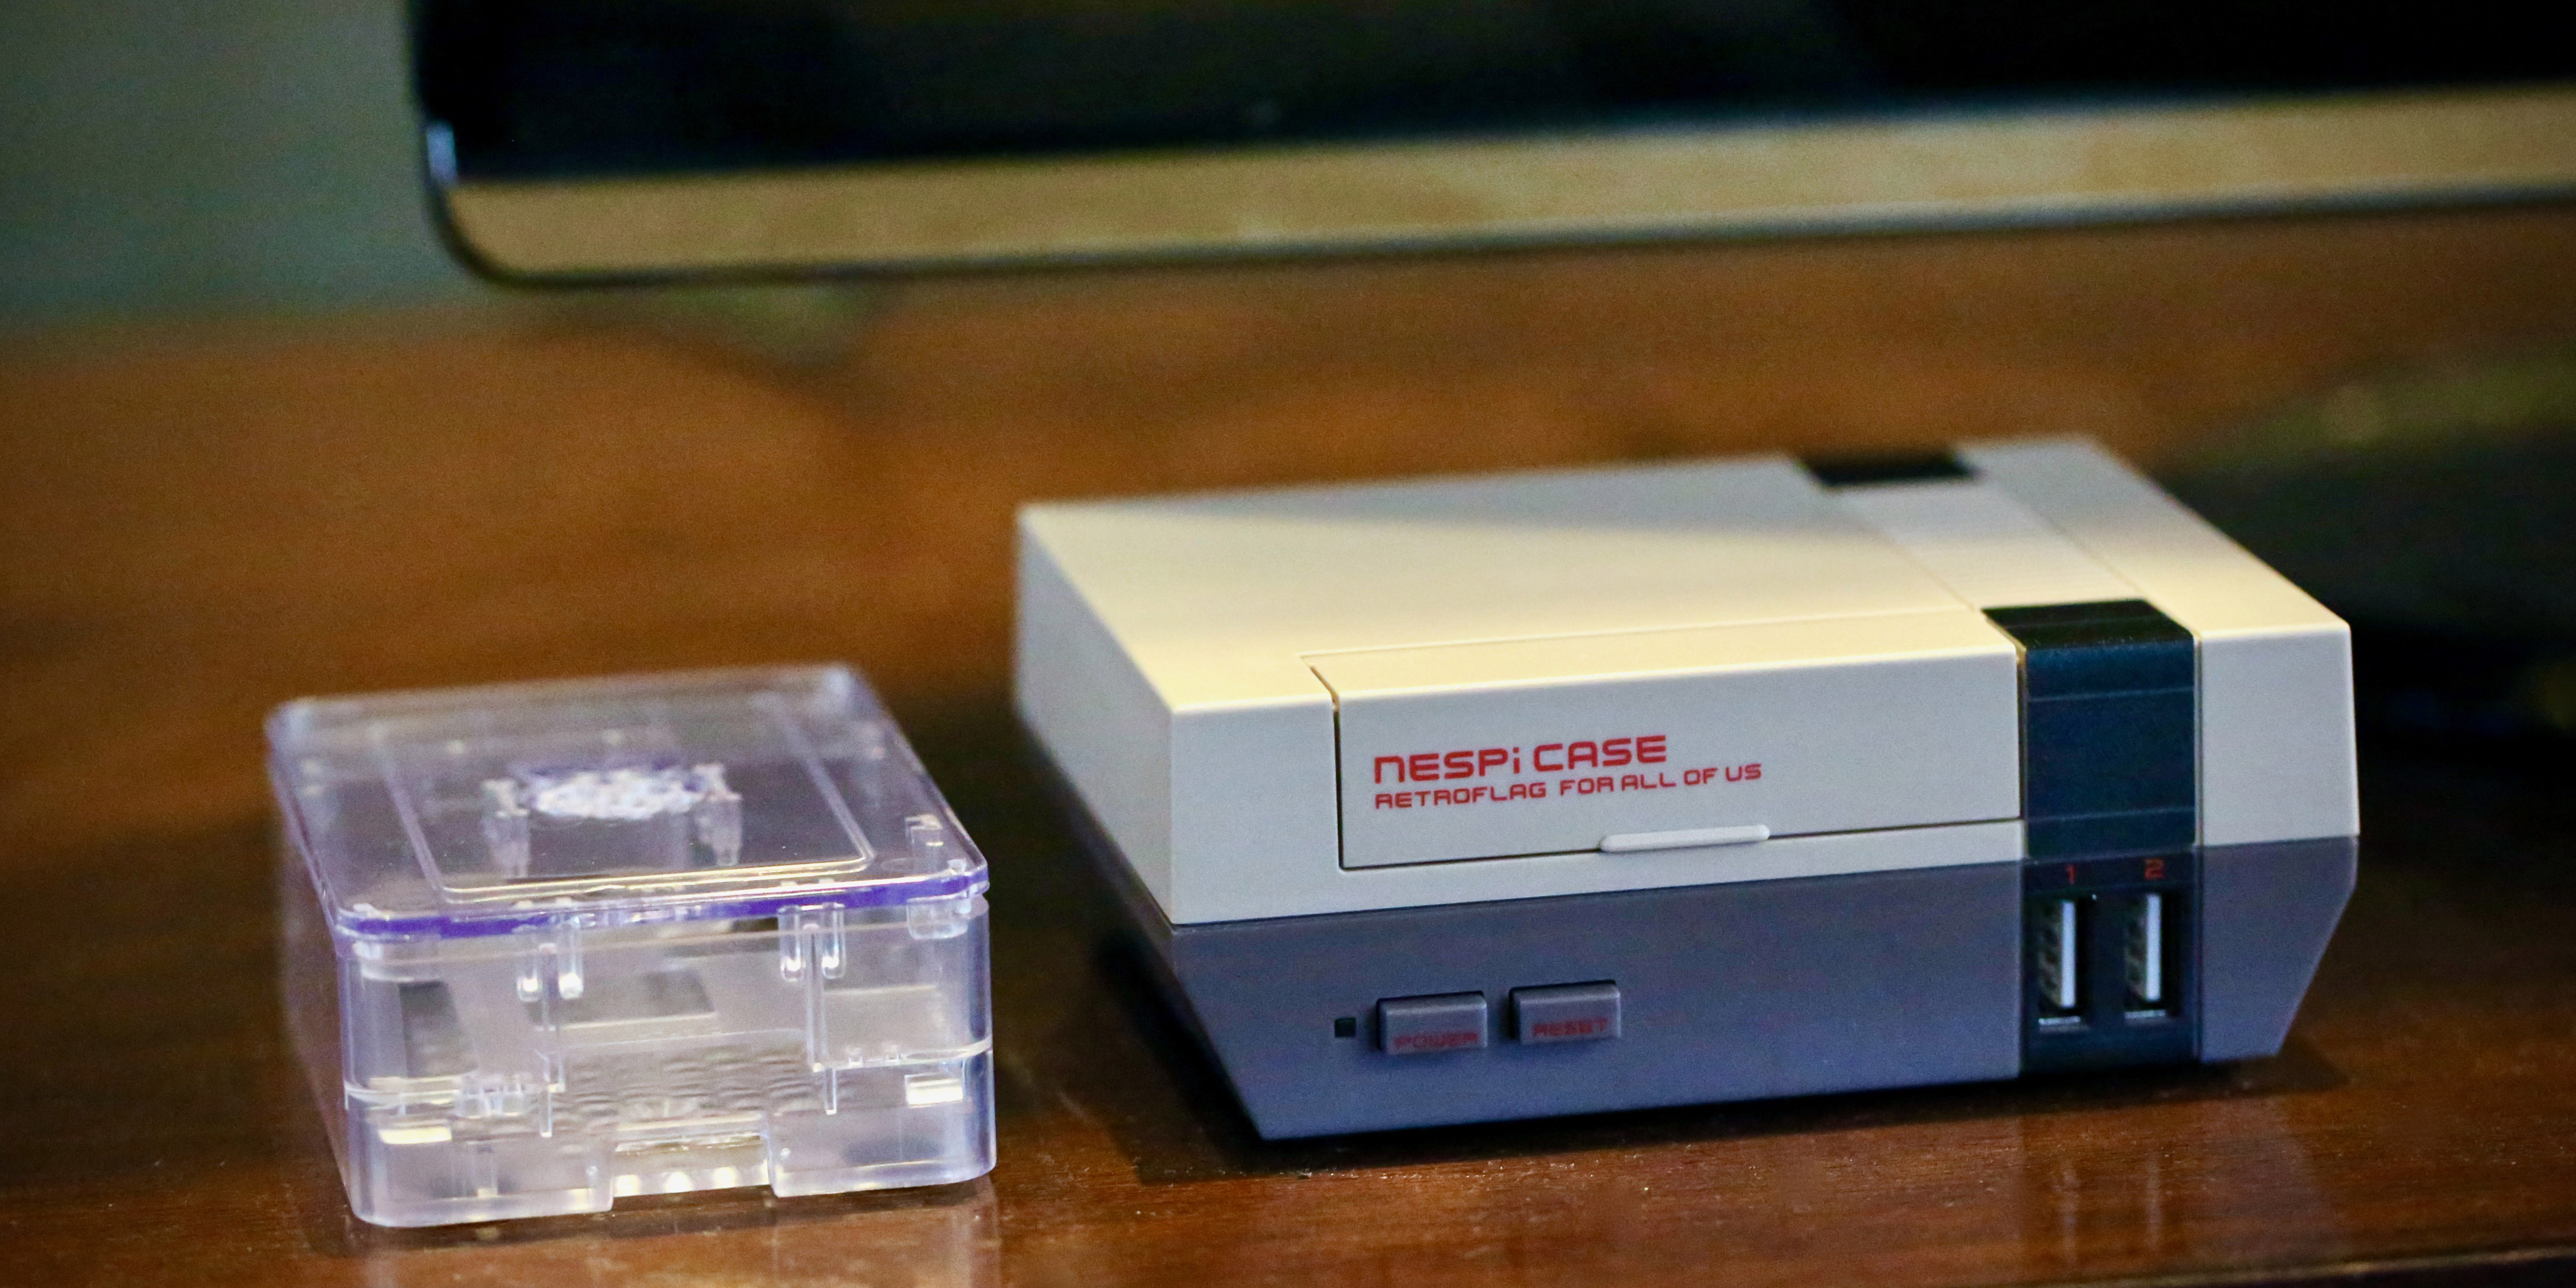 Use with Retropie or Kodi Raspberry Pi 3 case Retro gaming style NES SNES 